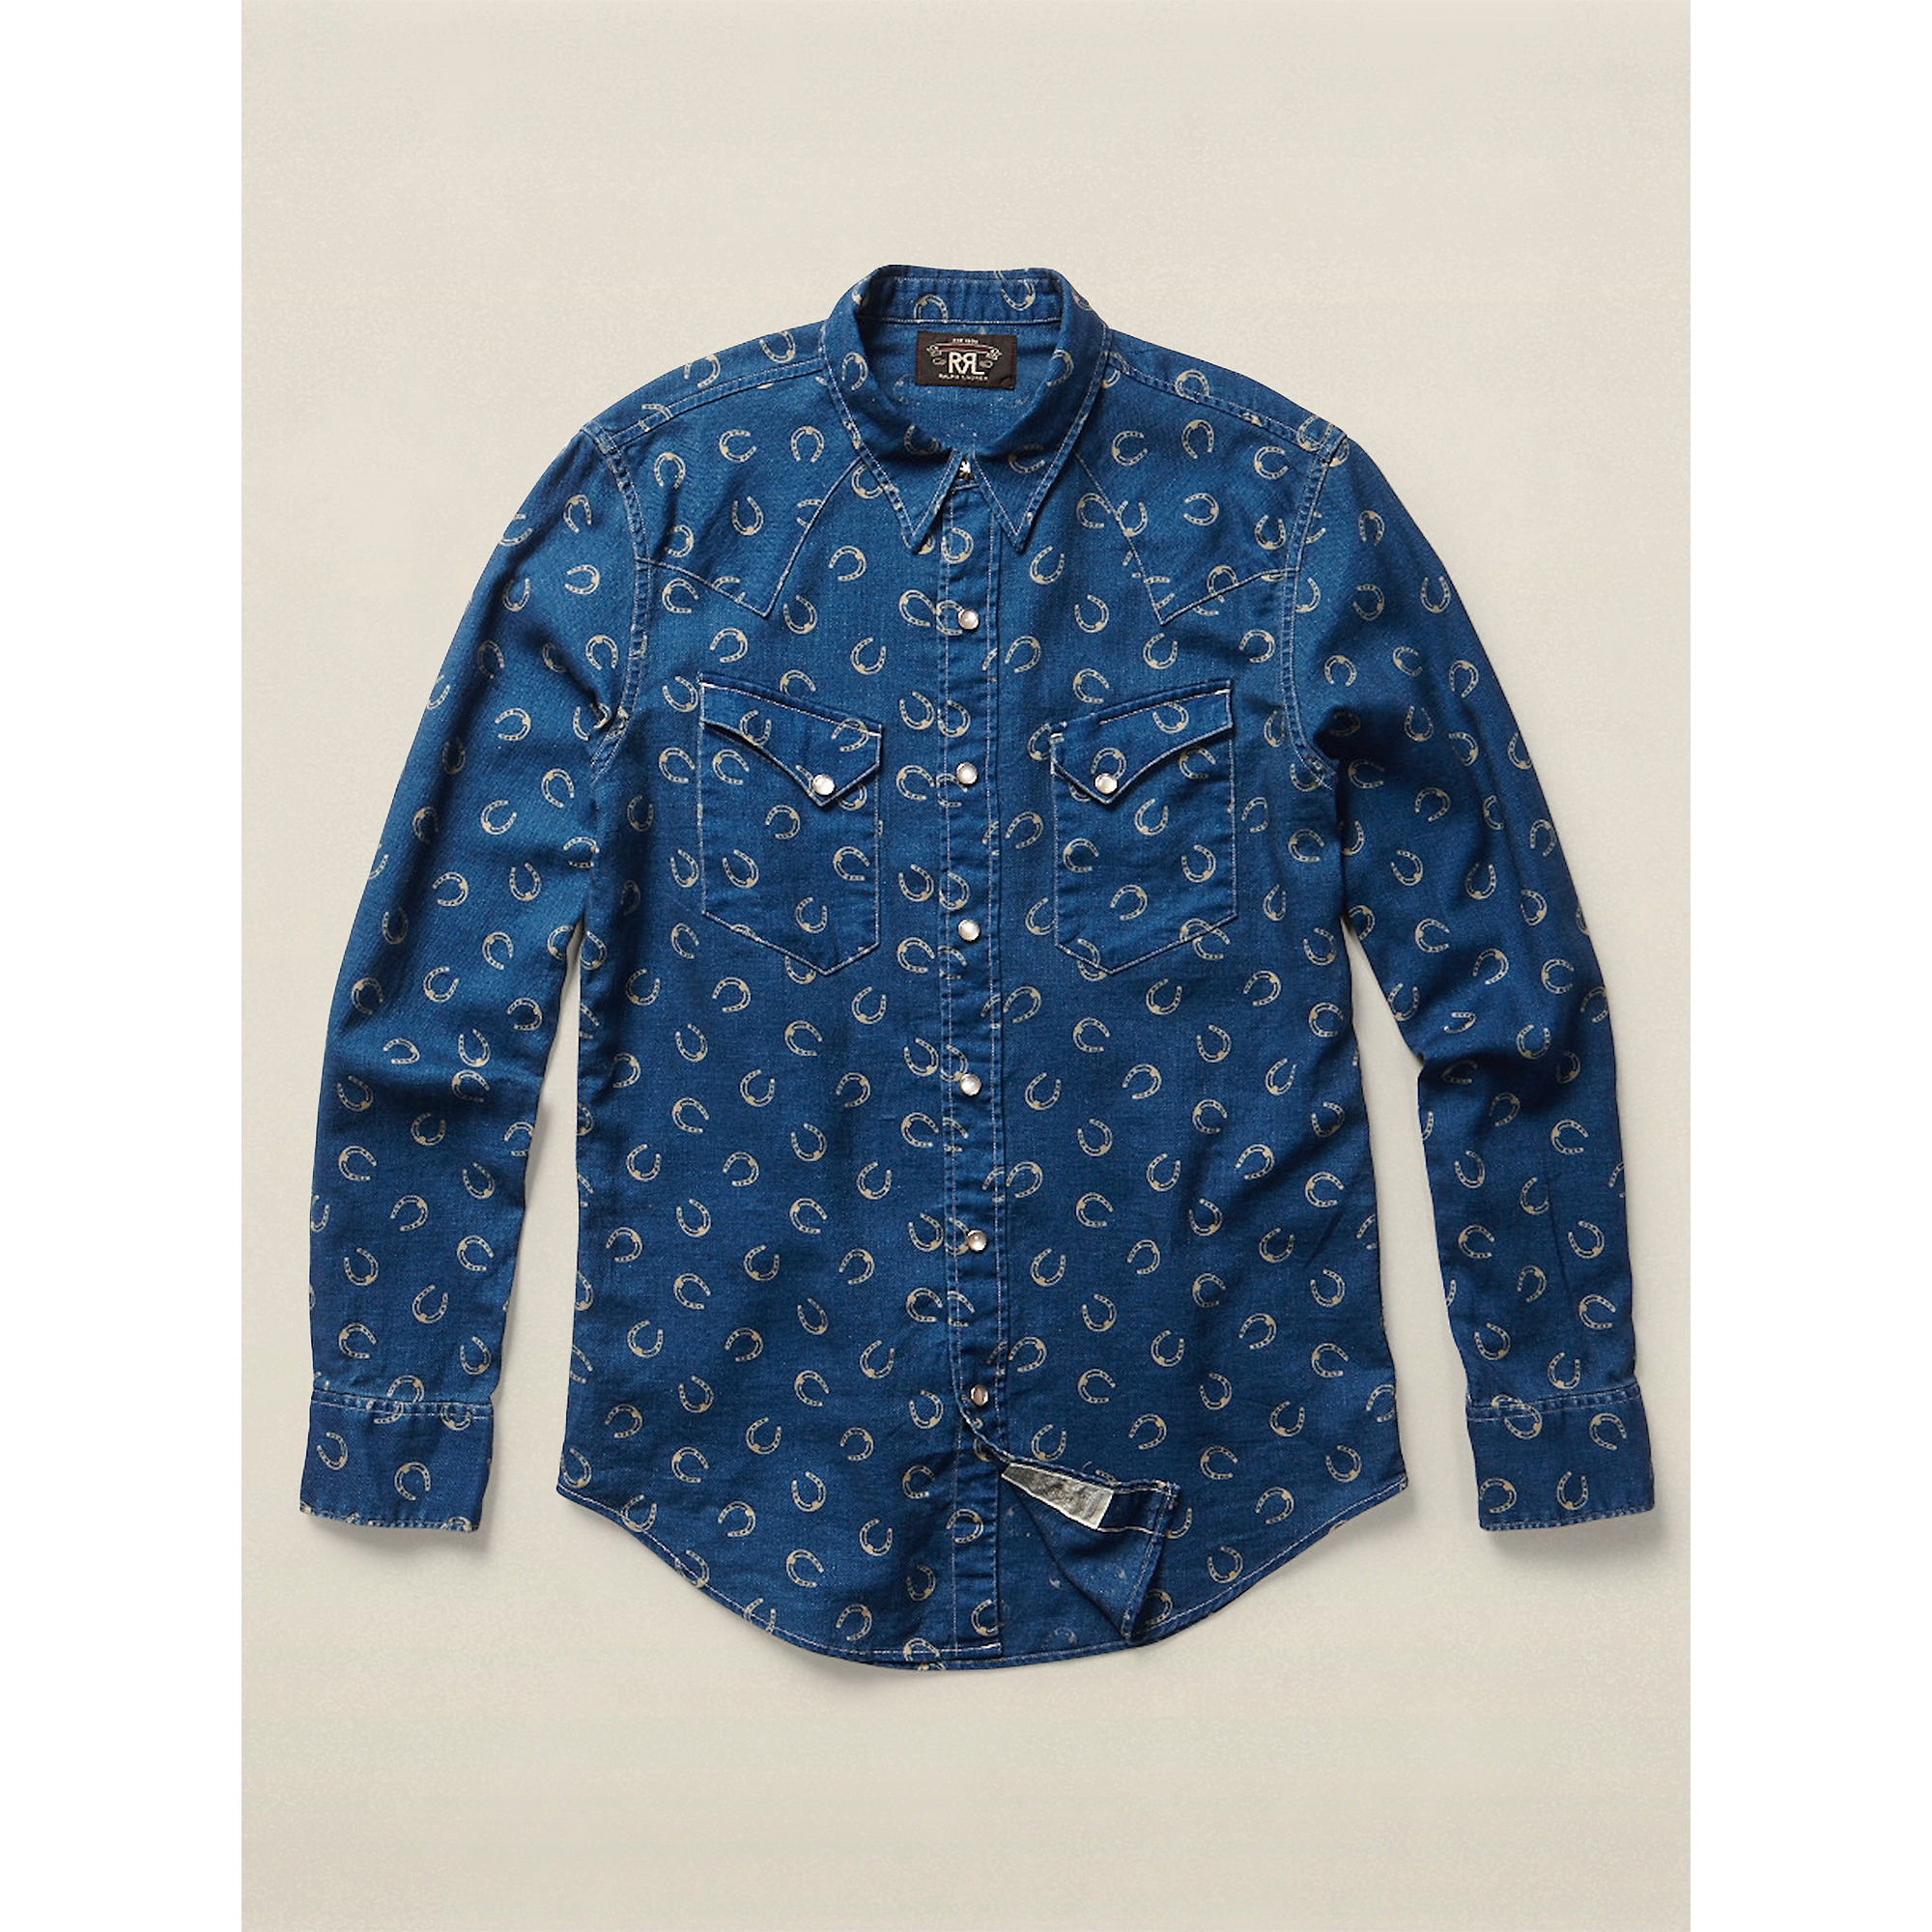 Lyst - Rrl Printed Western Shirt in Blue for Men